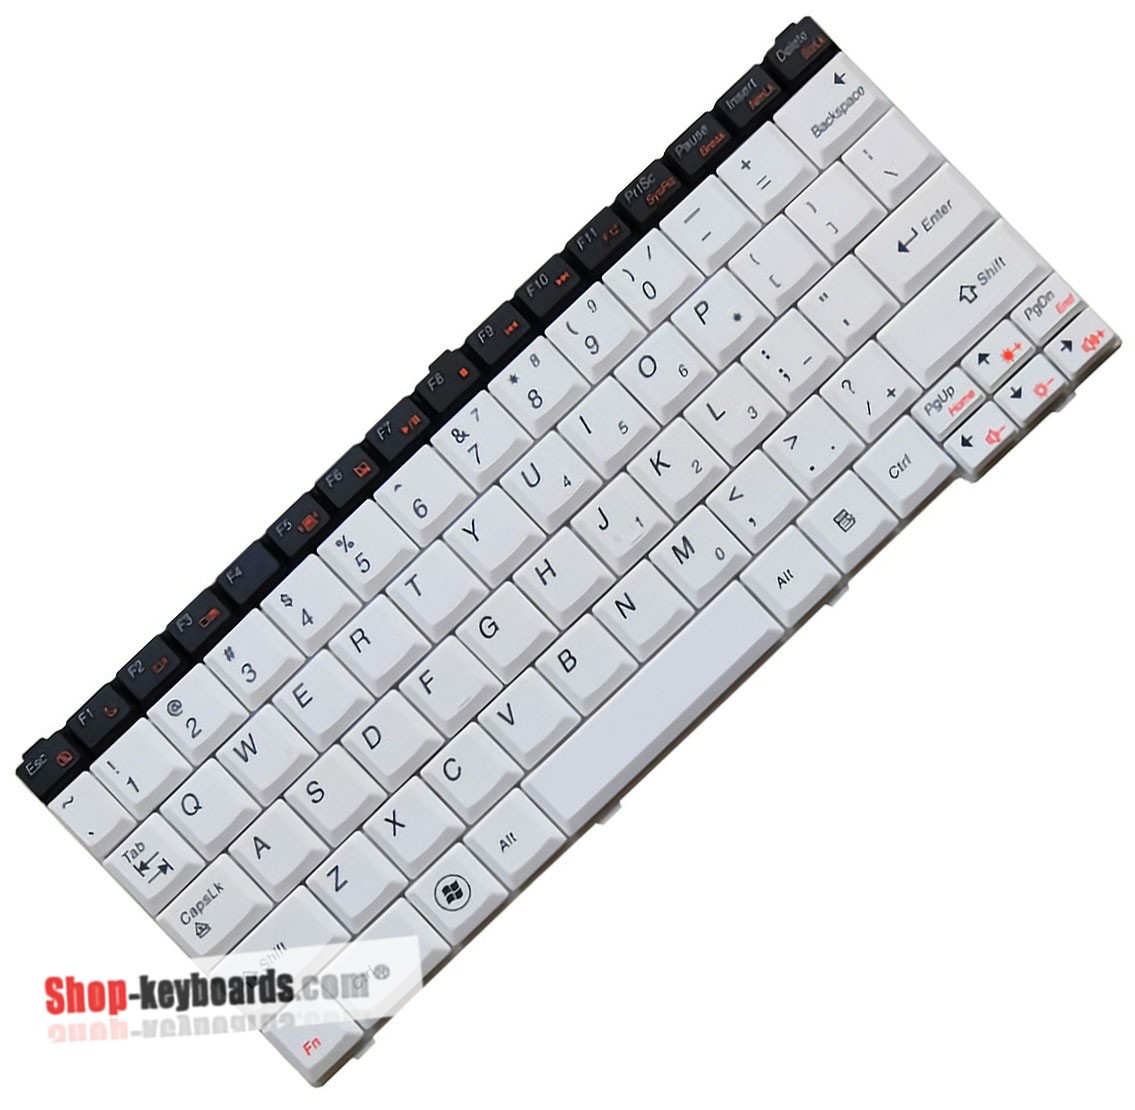 Lenovo Ideapad S10-3t 0651-85u Keyboard replacement